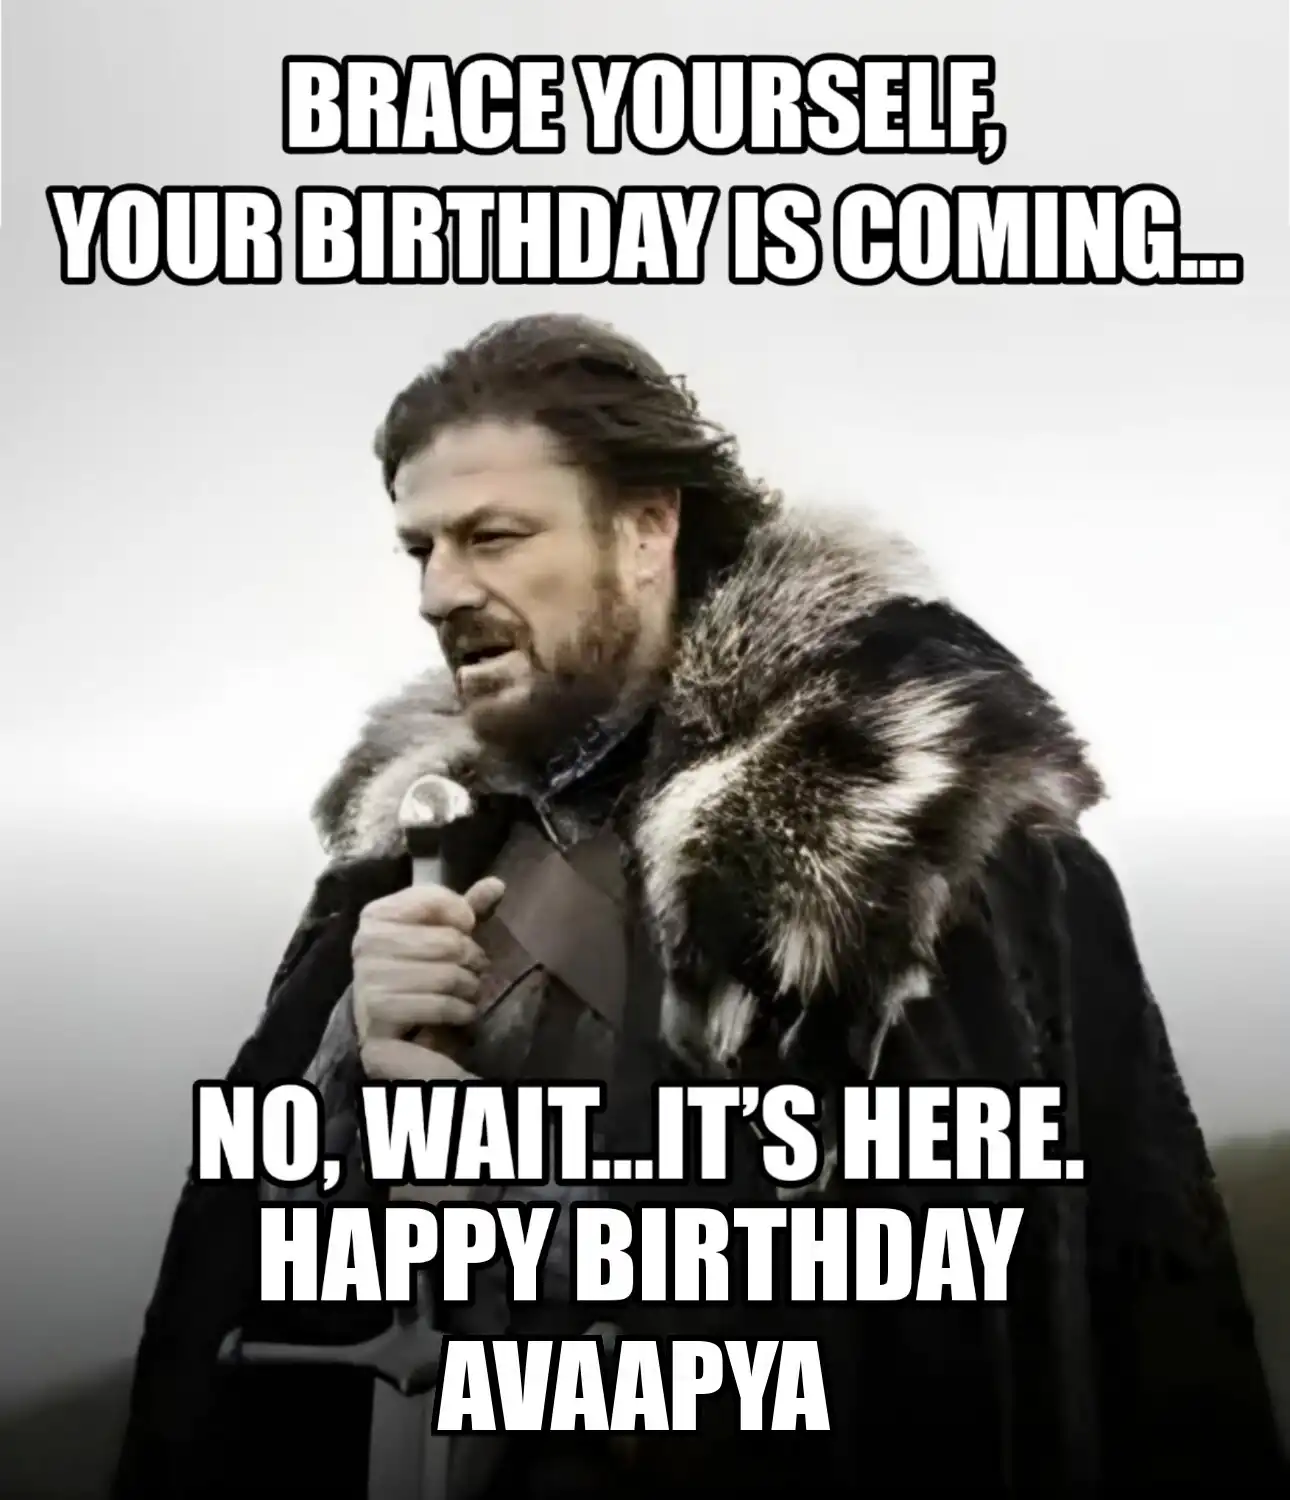 Happy Birthday Avaapya Brace Yourself Your Birthday Is Coming Meme